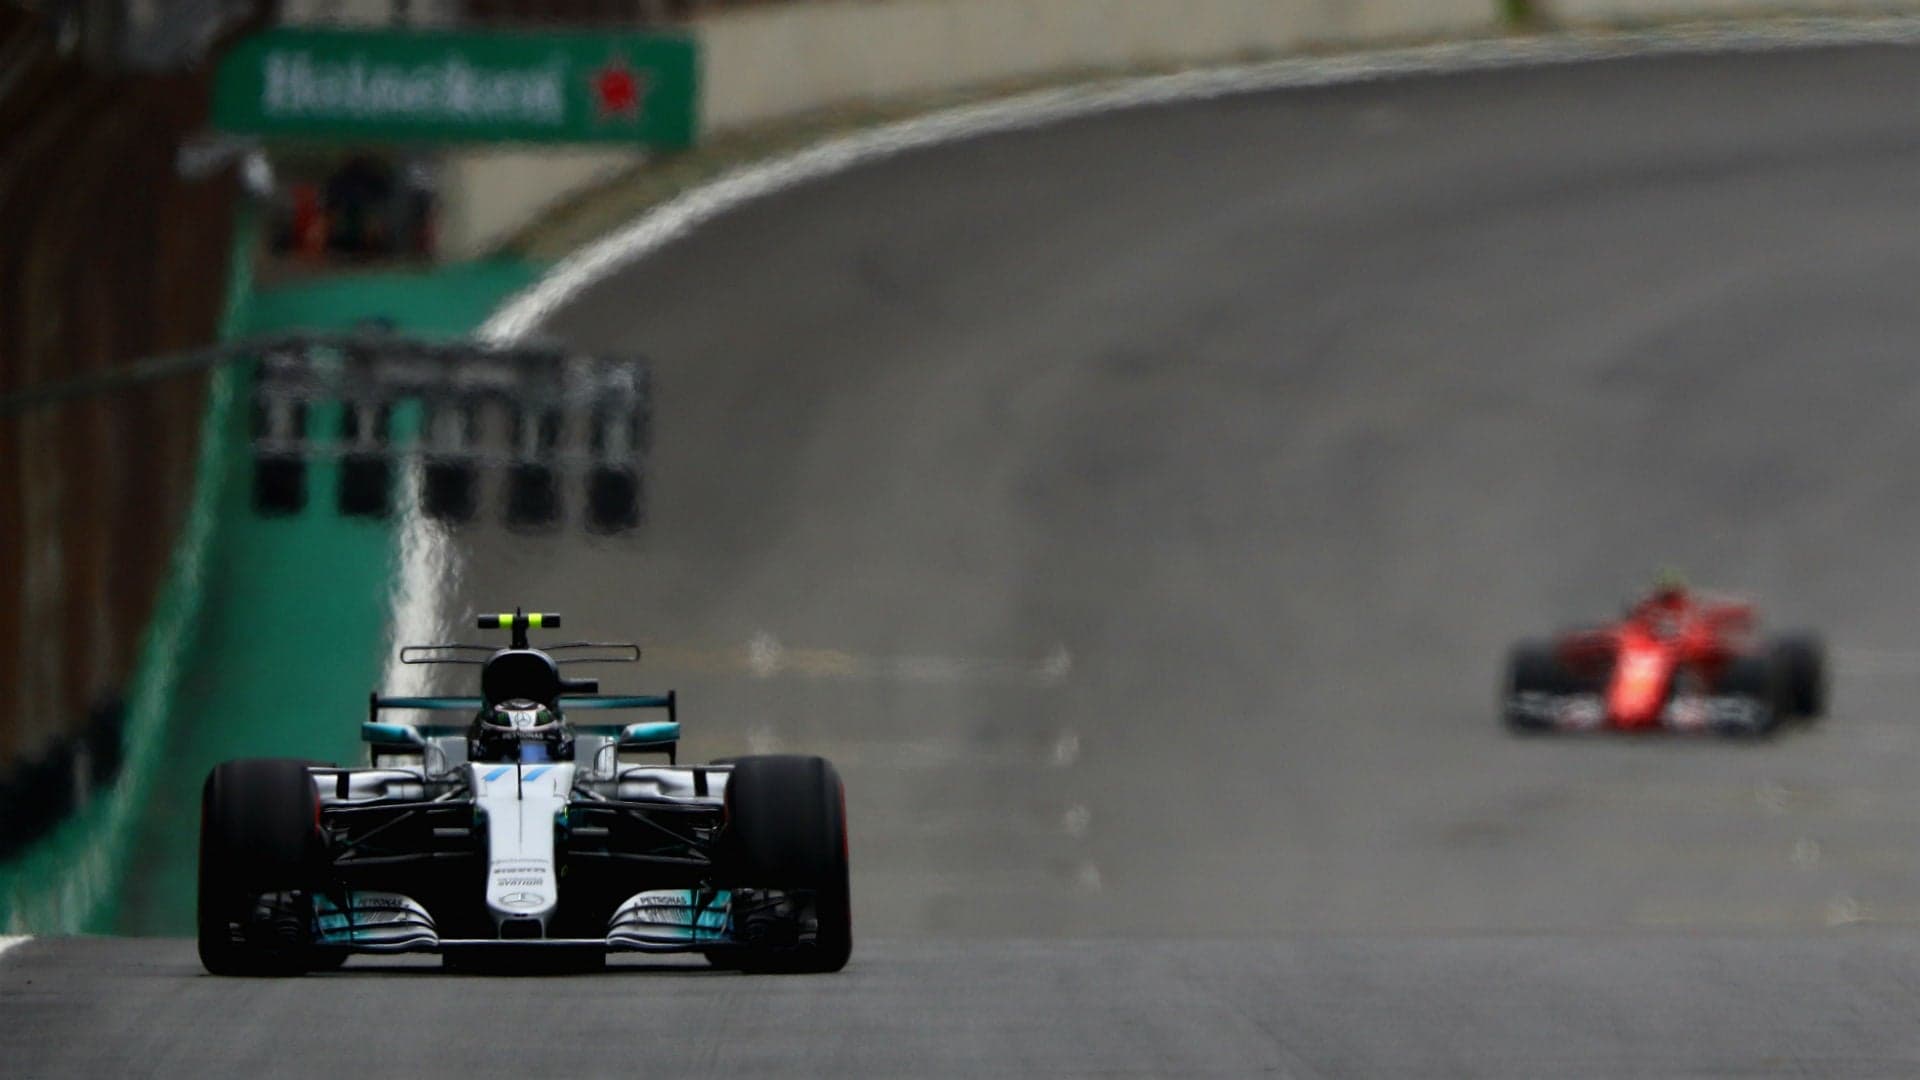 Valtteri Bottas Takes Pole Position in Brazil After Hamilton Q1 Crash